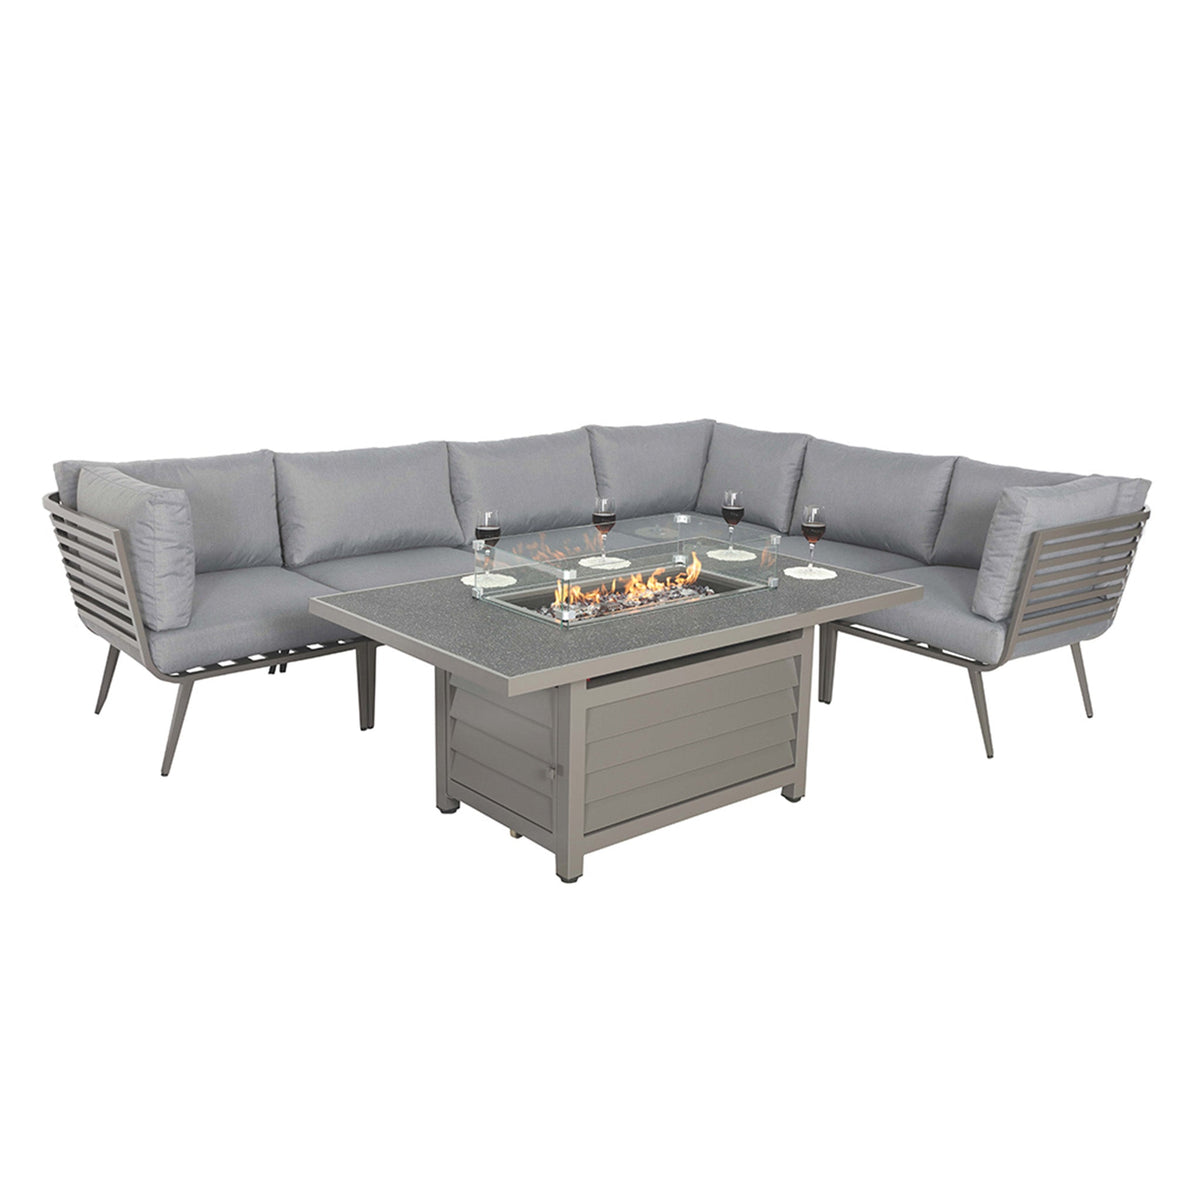 Mayfair 150cm Grey Outdoor Corner Fire Pit Table Lounge Set